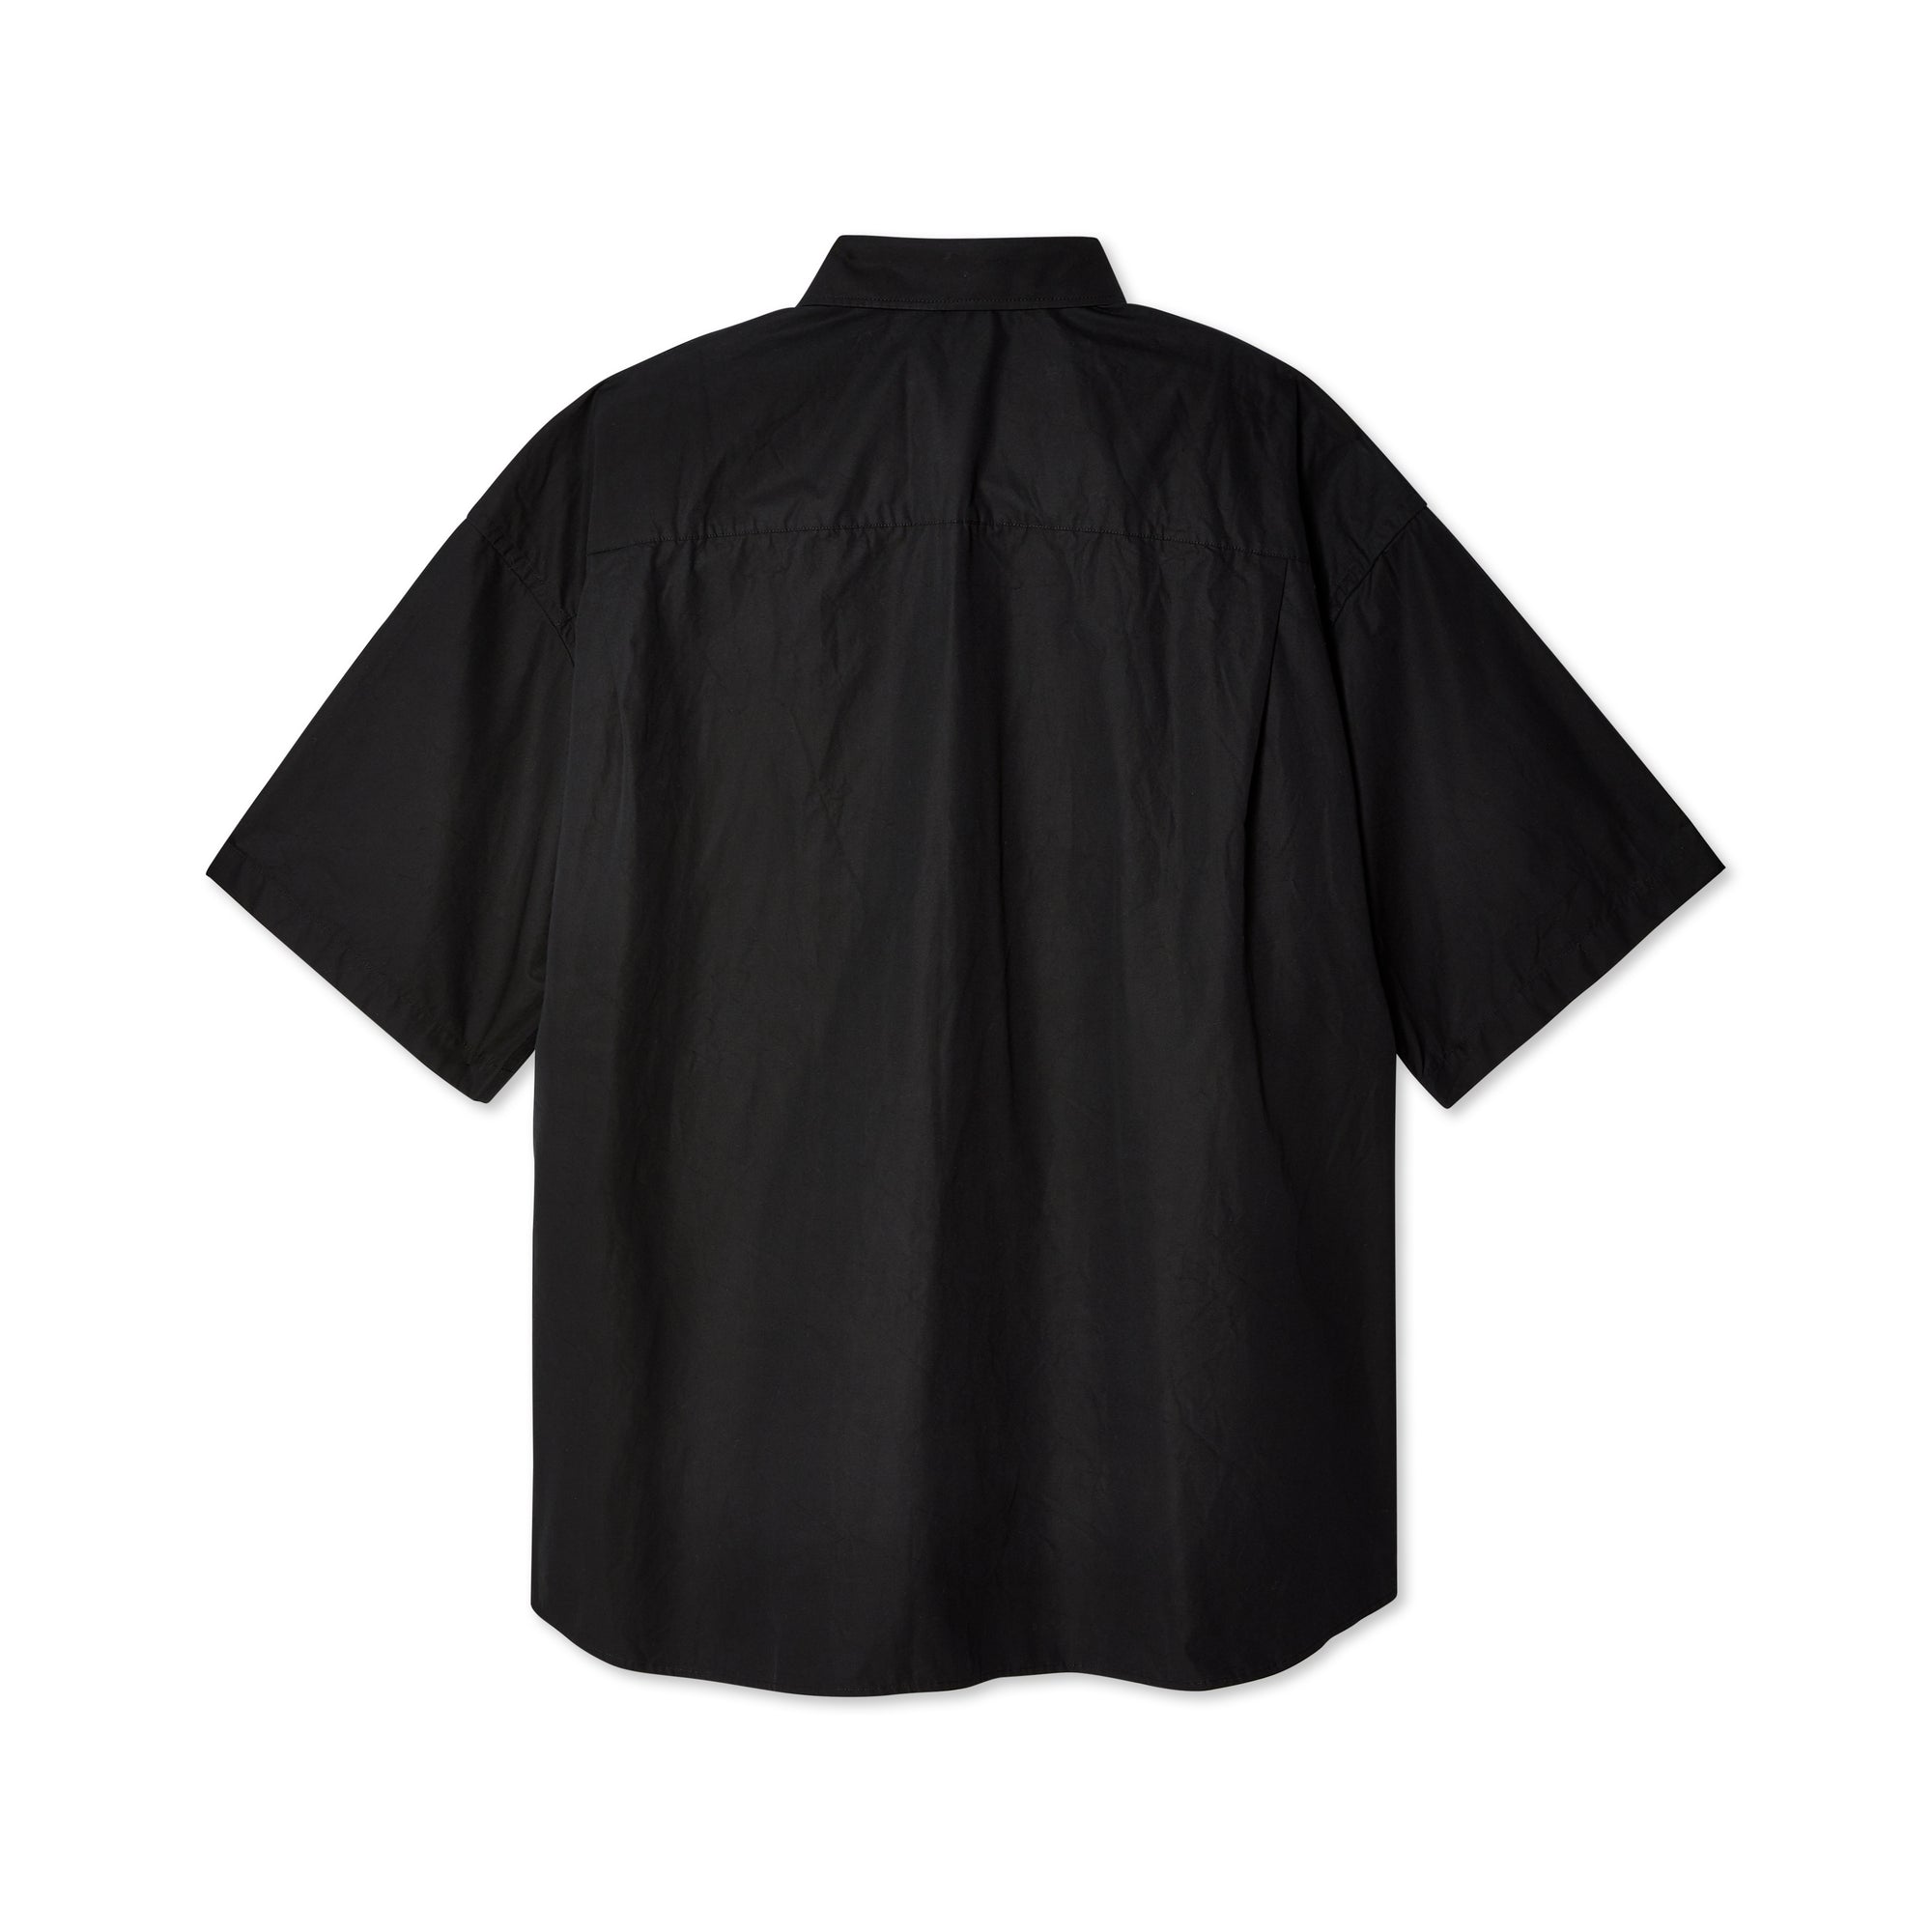 Balenciaga - Men's Short Sleeve Shirt - (Black) view 2